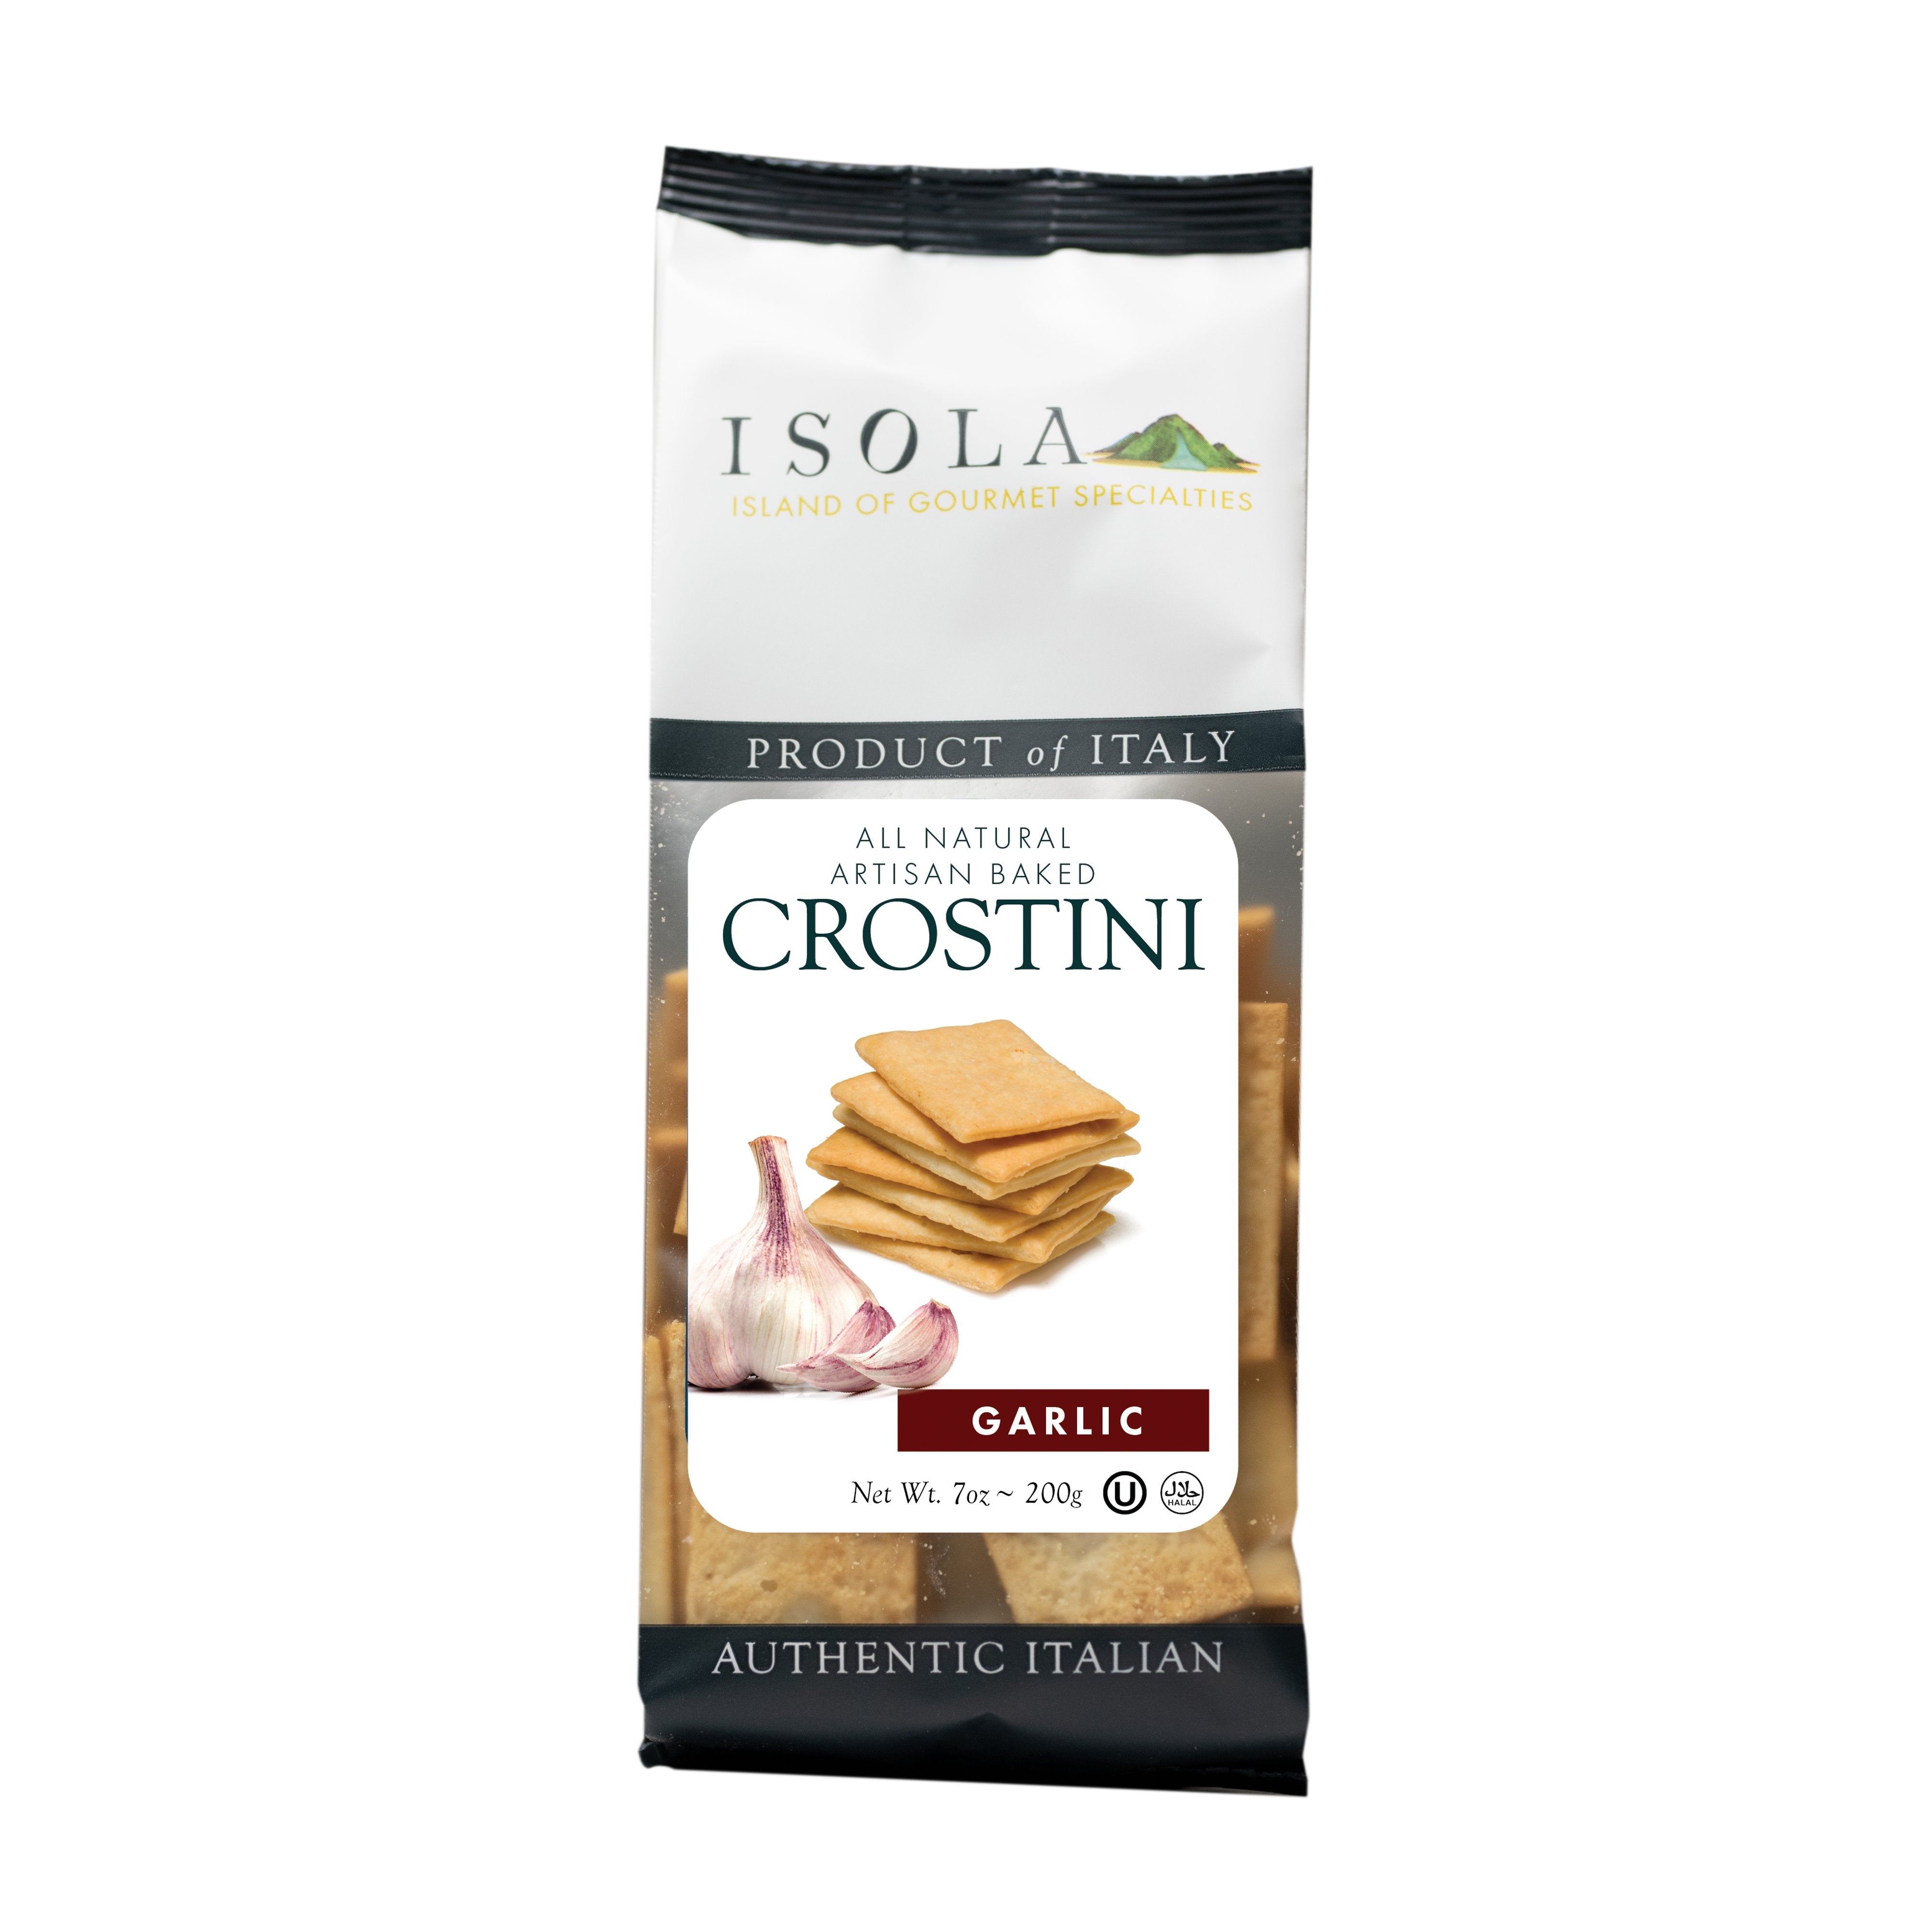 Crostini - igourmet